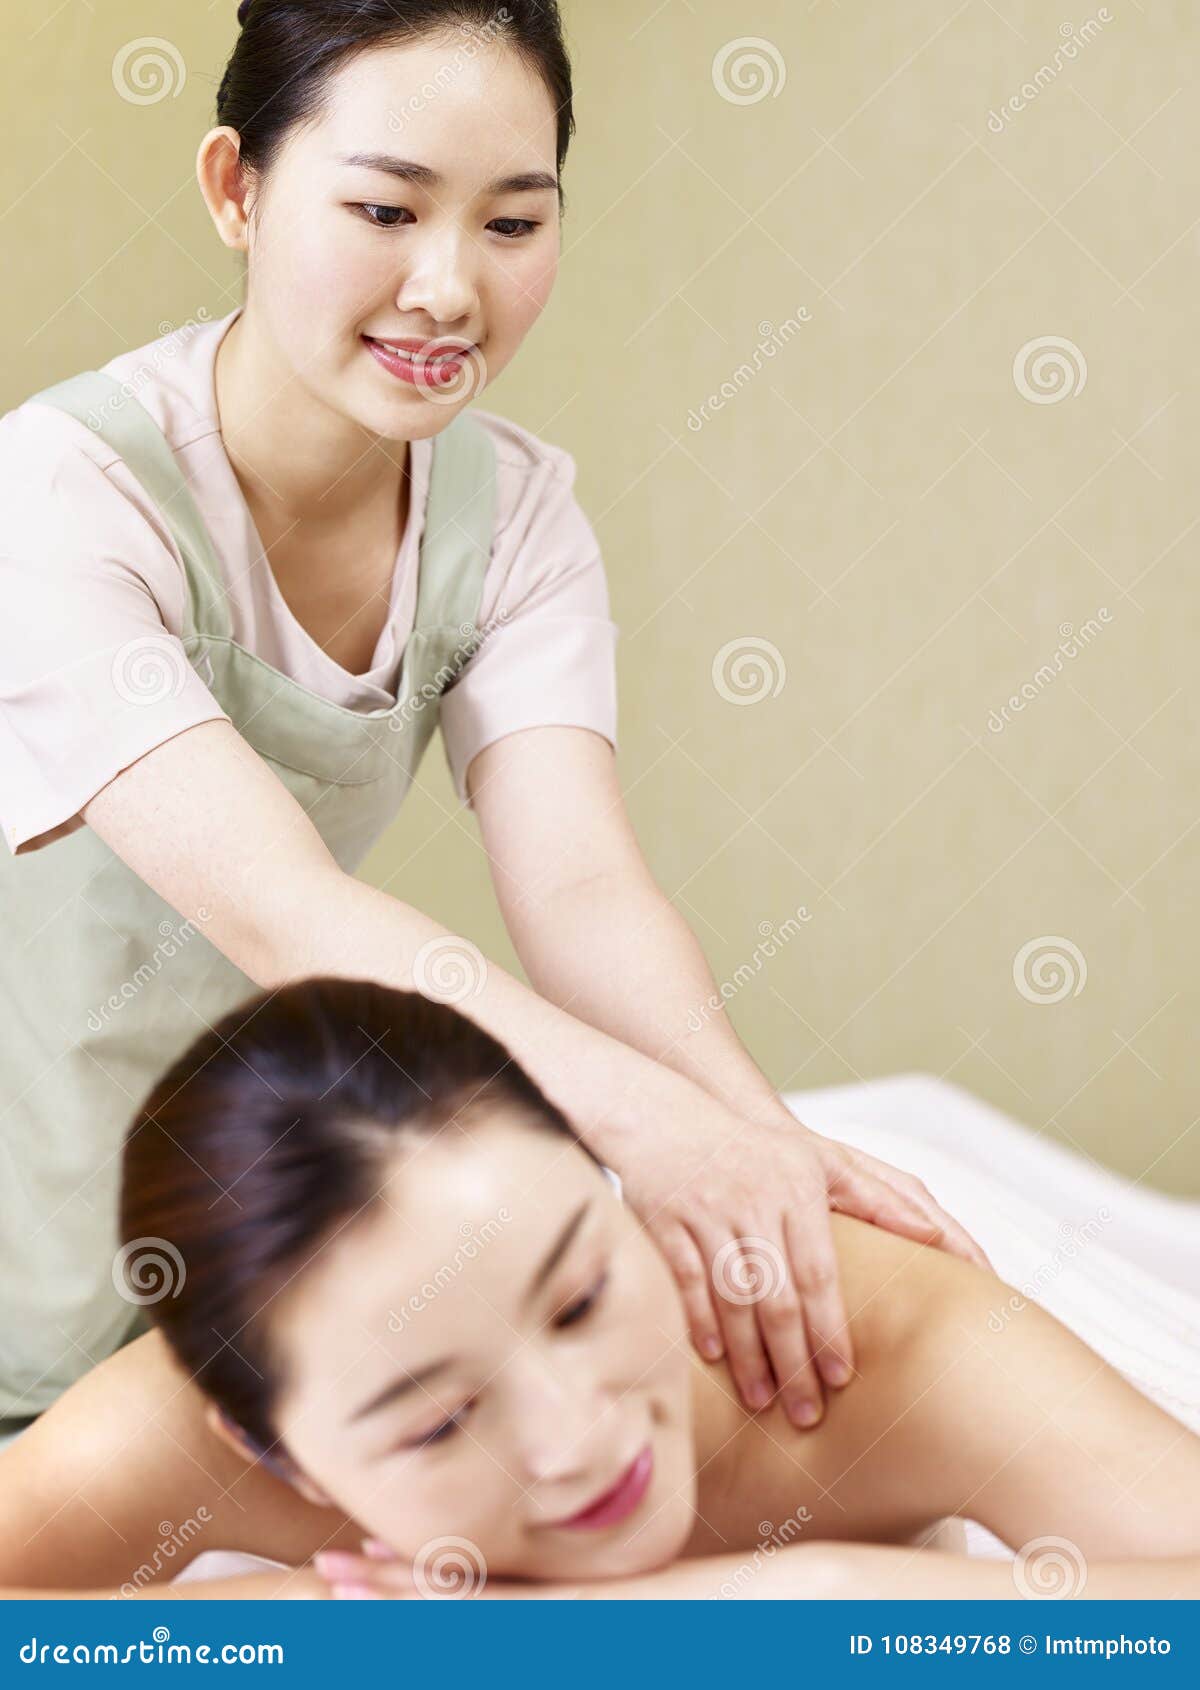 carl j evans recommends Asian Massage Pic